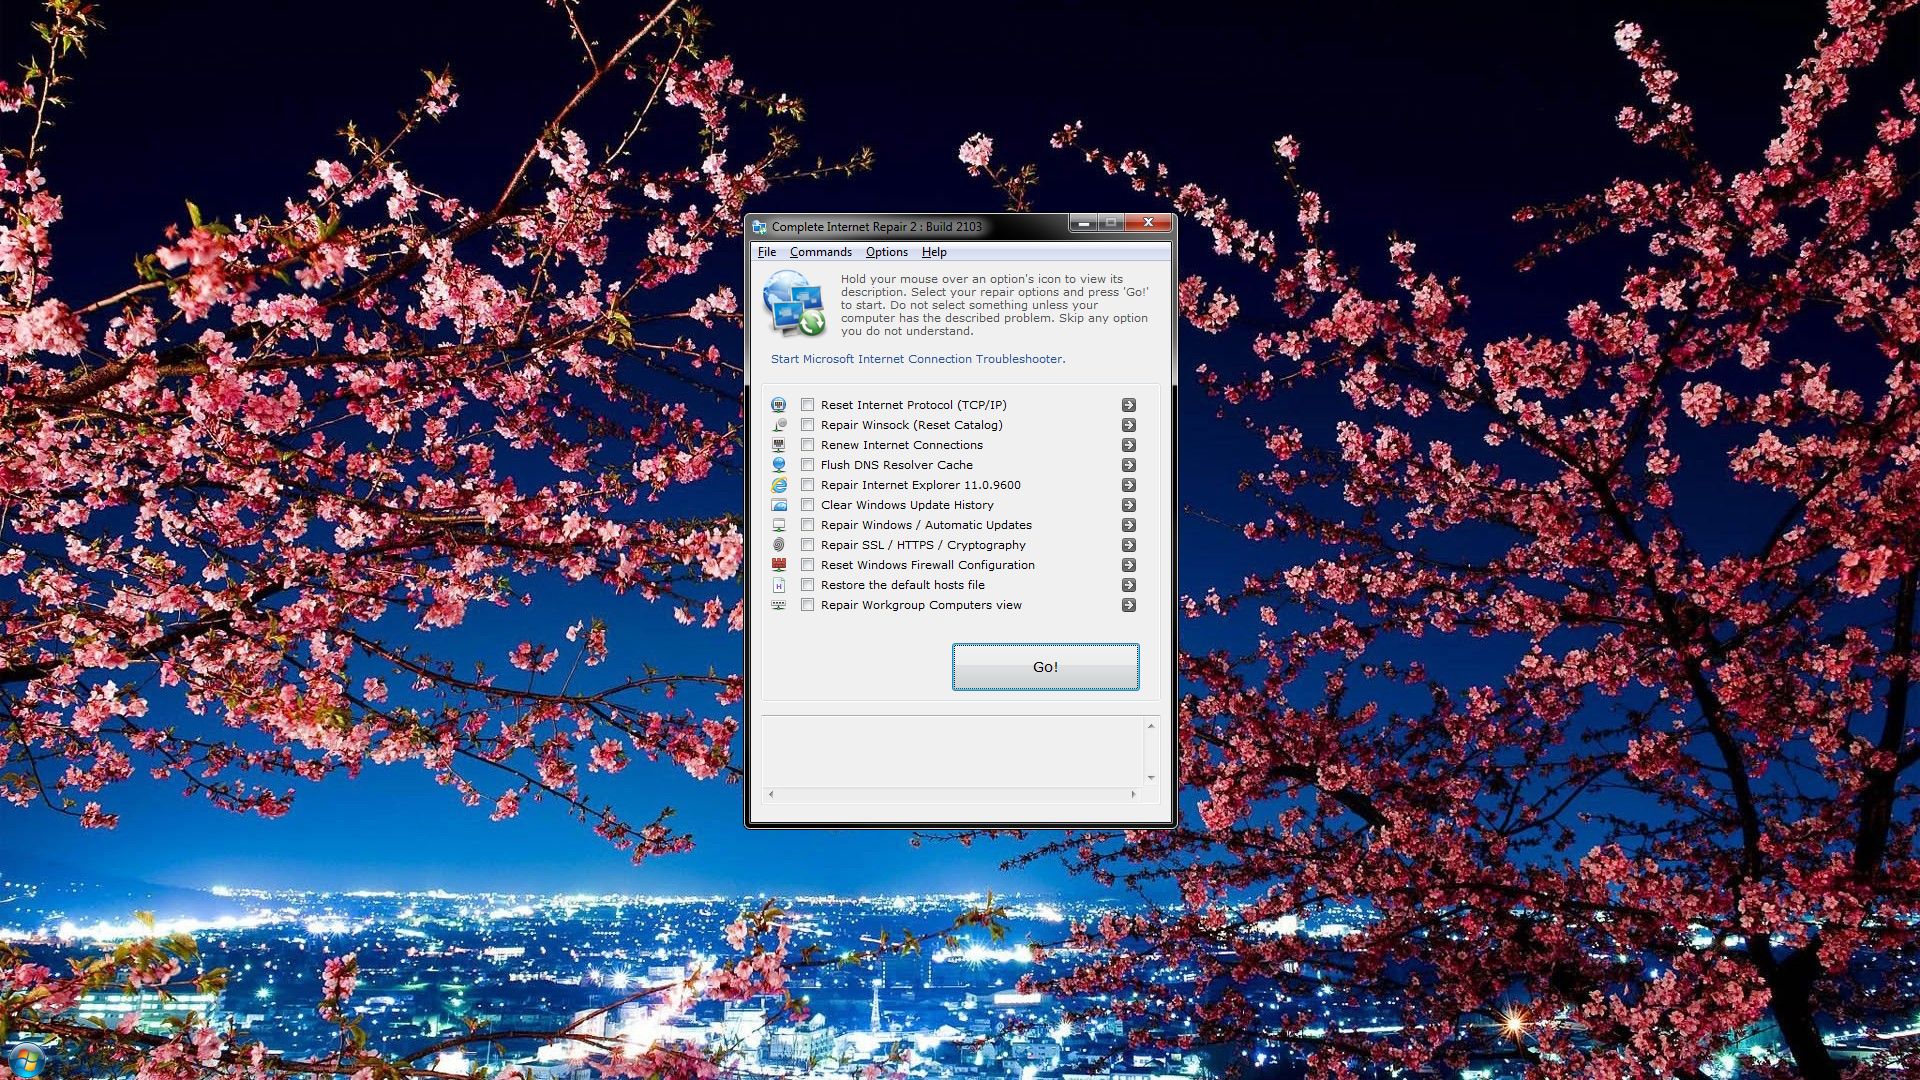 instal the last version for windows Complete Internet Repair 9.1.3.6335